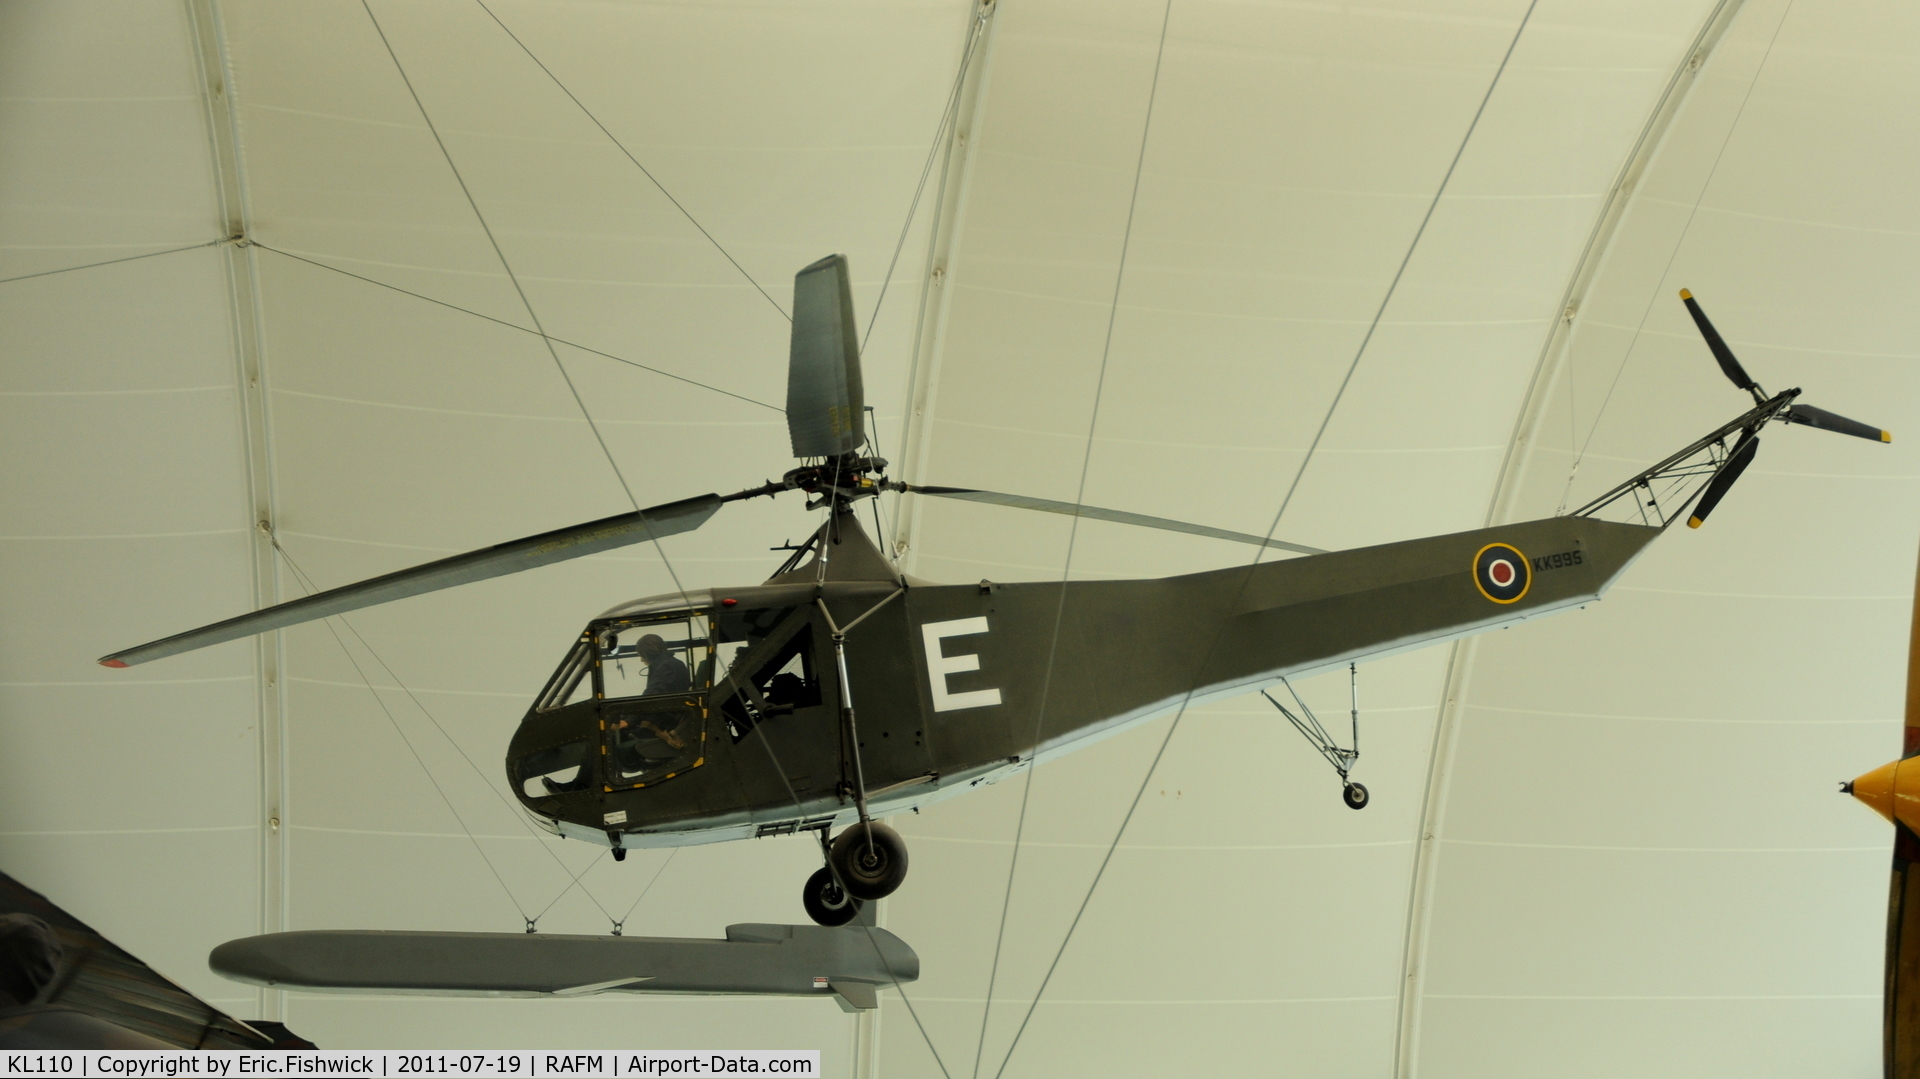 KL110, 1944 Sikorsky R-4B Hoverfly I C/N 140, KK995 at the RAF Museum, Hendon, London.